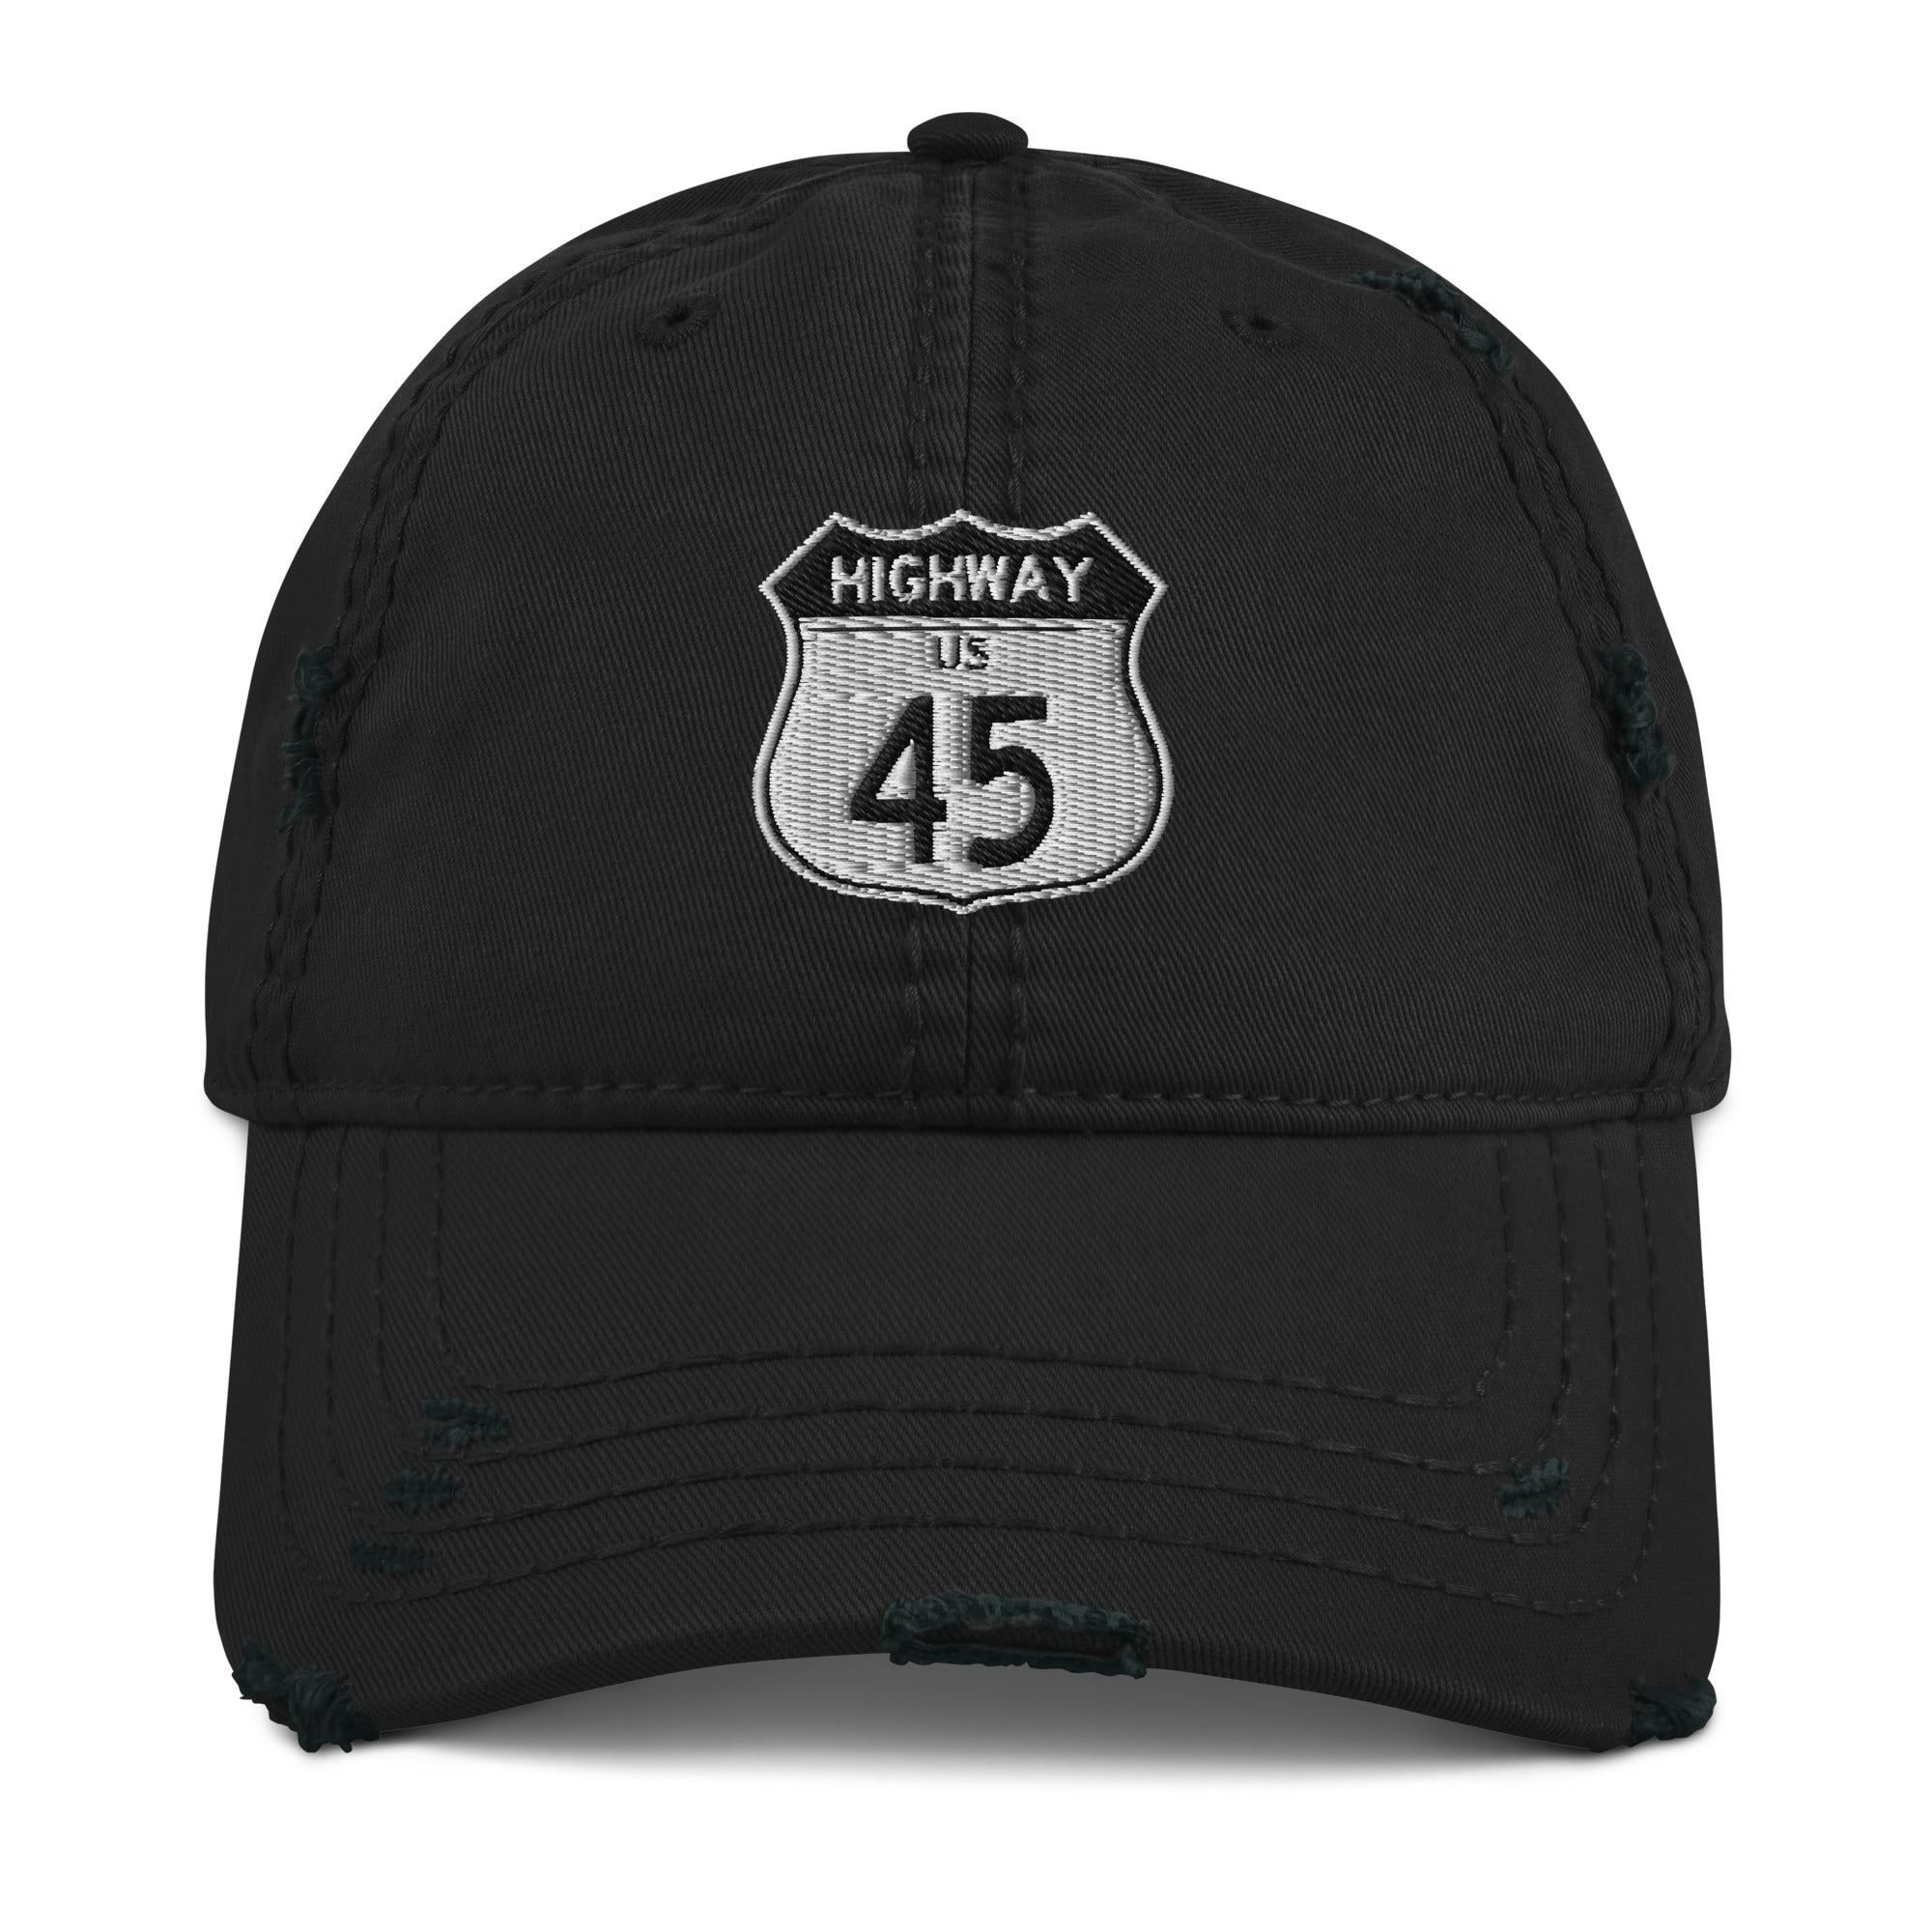 Highway 45 Distressed Dad Hat